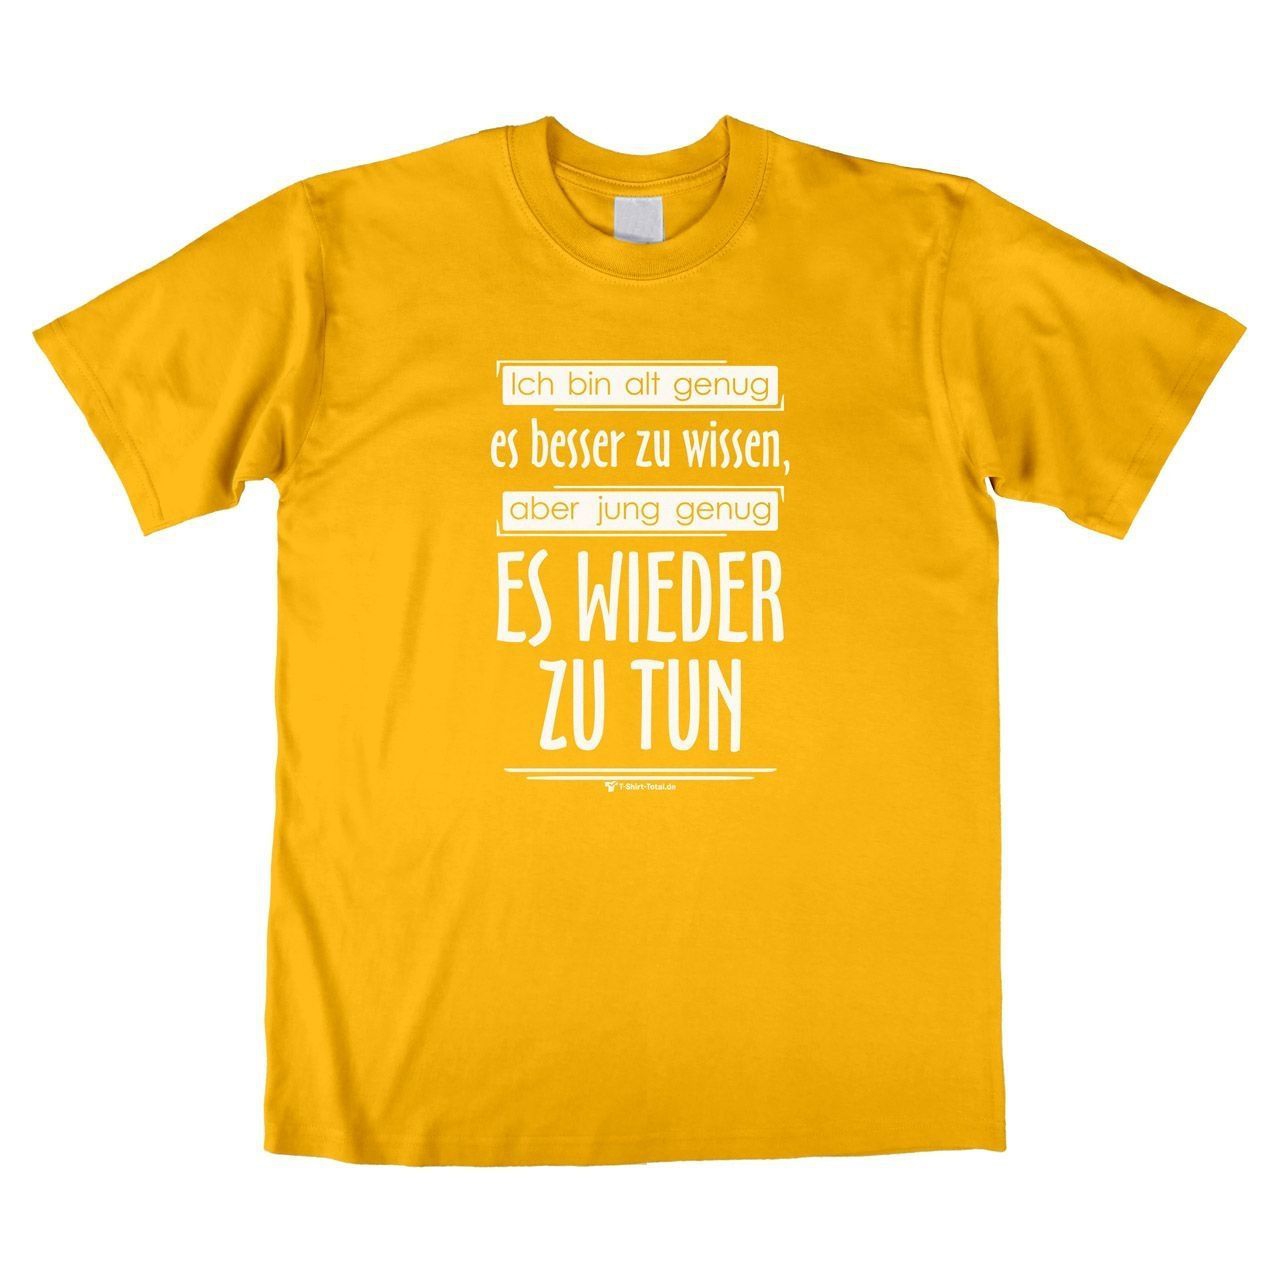 Ich bin alt genug Unisex T-Shirt gelb Extra Large